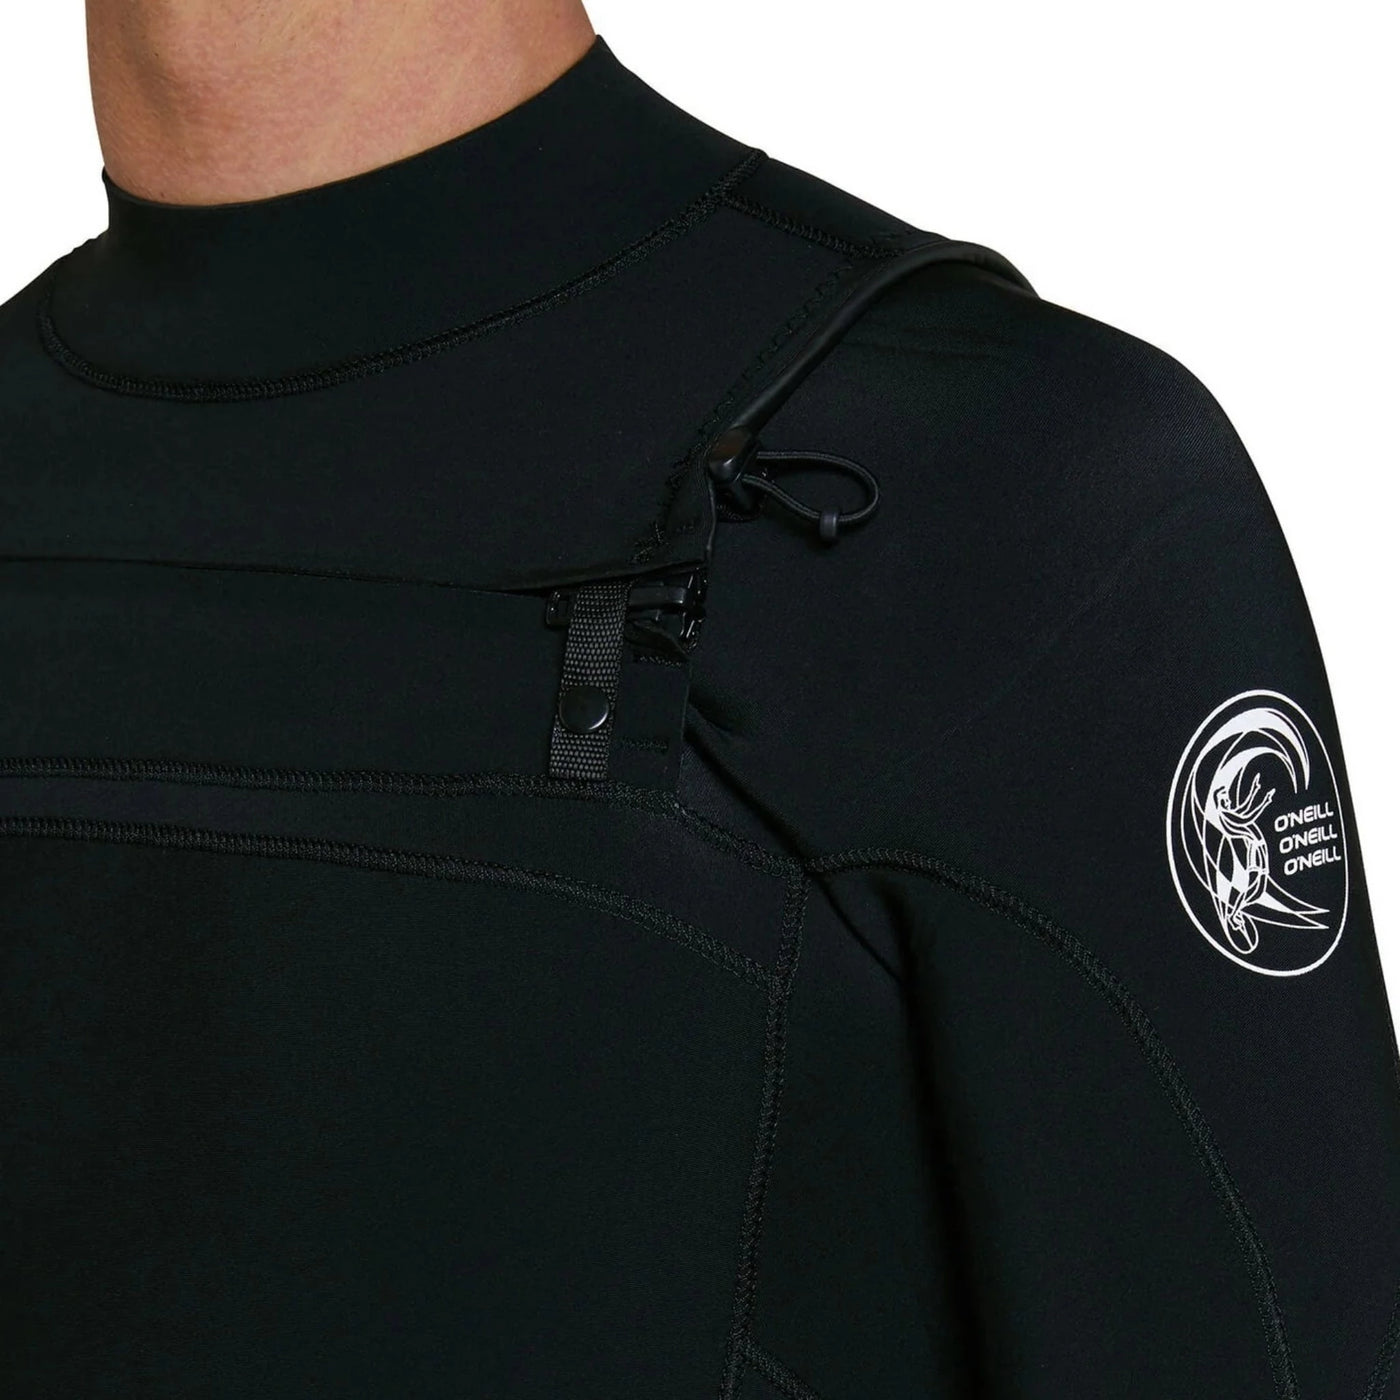 O'Neill Defender 4/3mm Steamer Wetsuit - Chest Zip